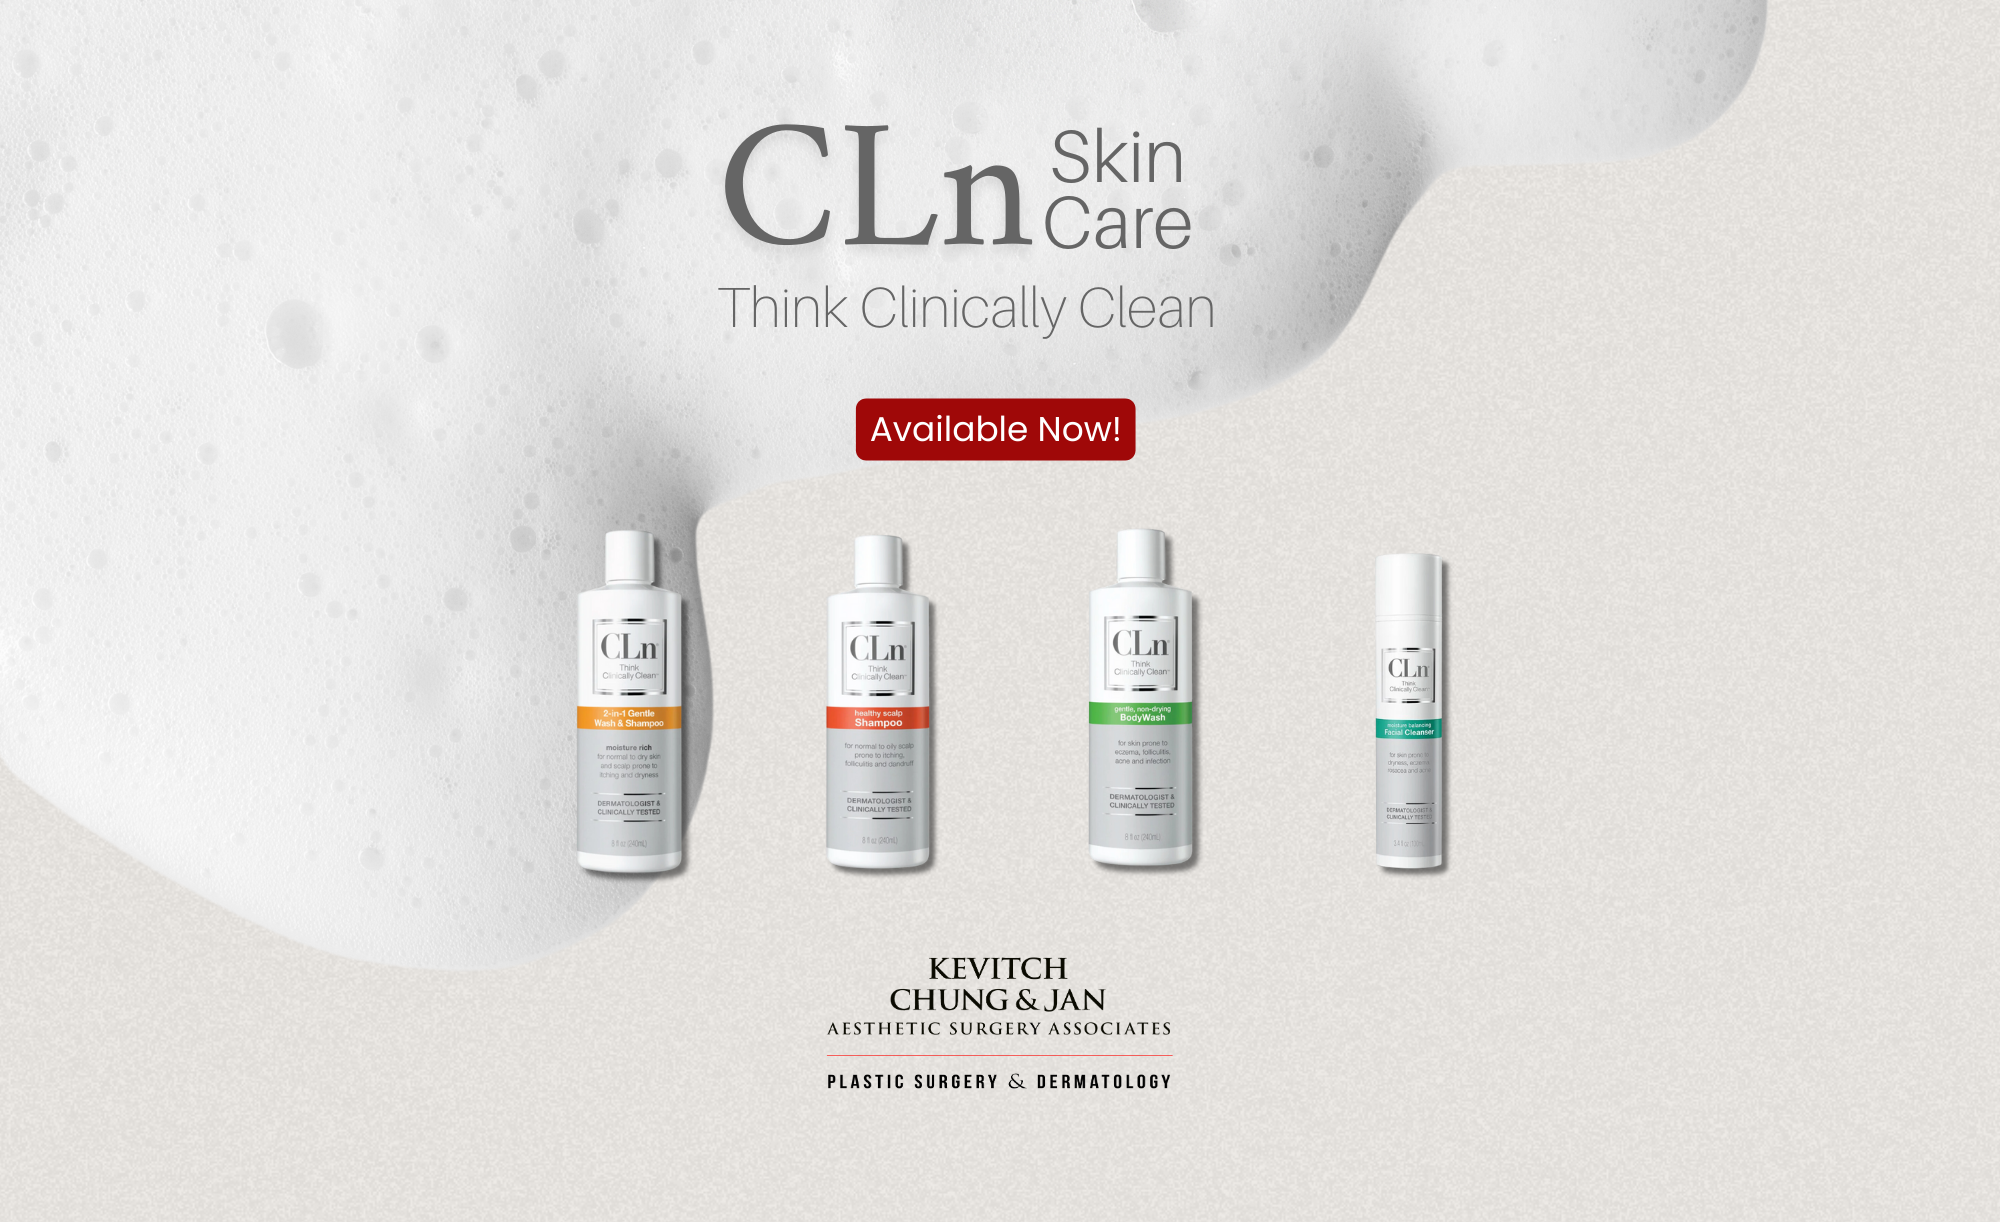 Hidradenitis Suppurativa Landing Page – CLn Skin Care